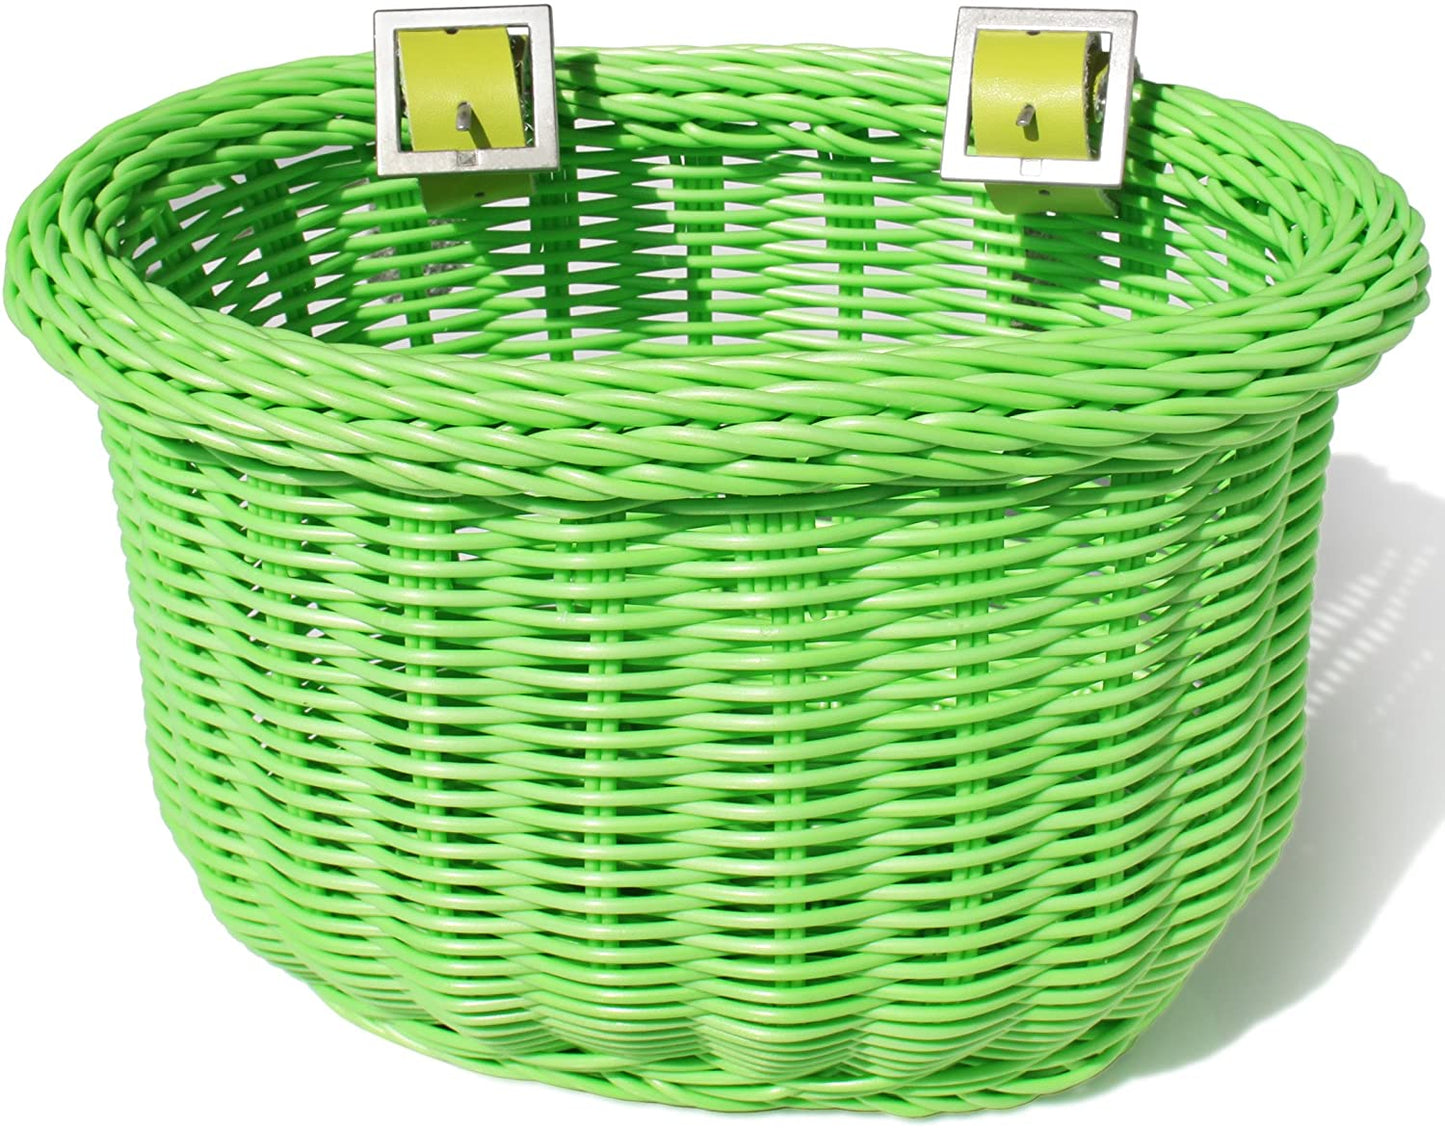 Colorbasket Child Basket 10x7x6.75